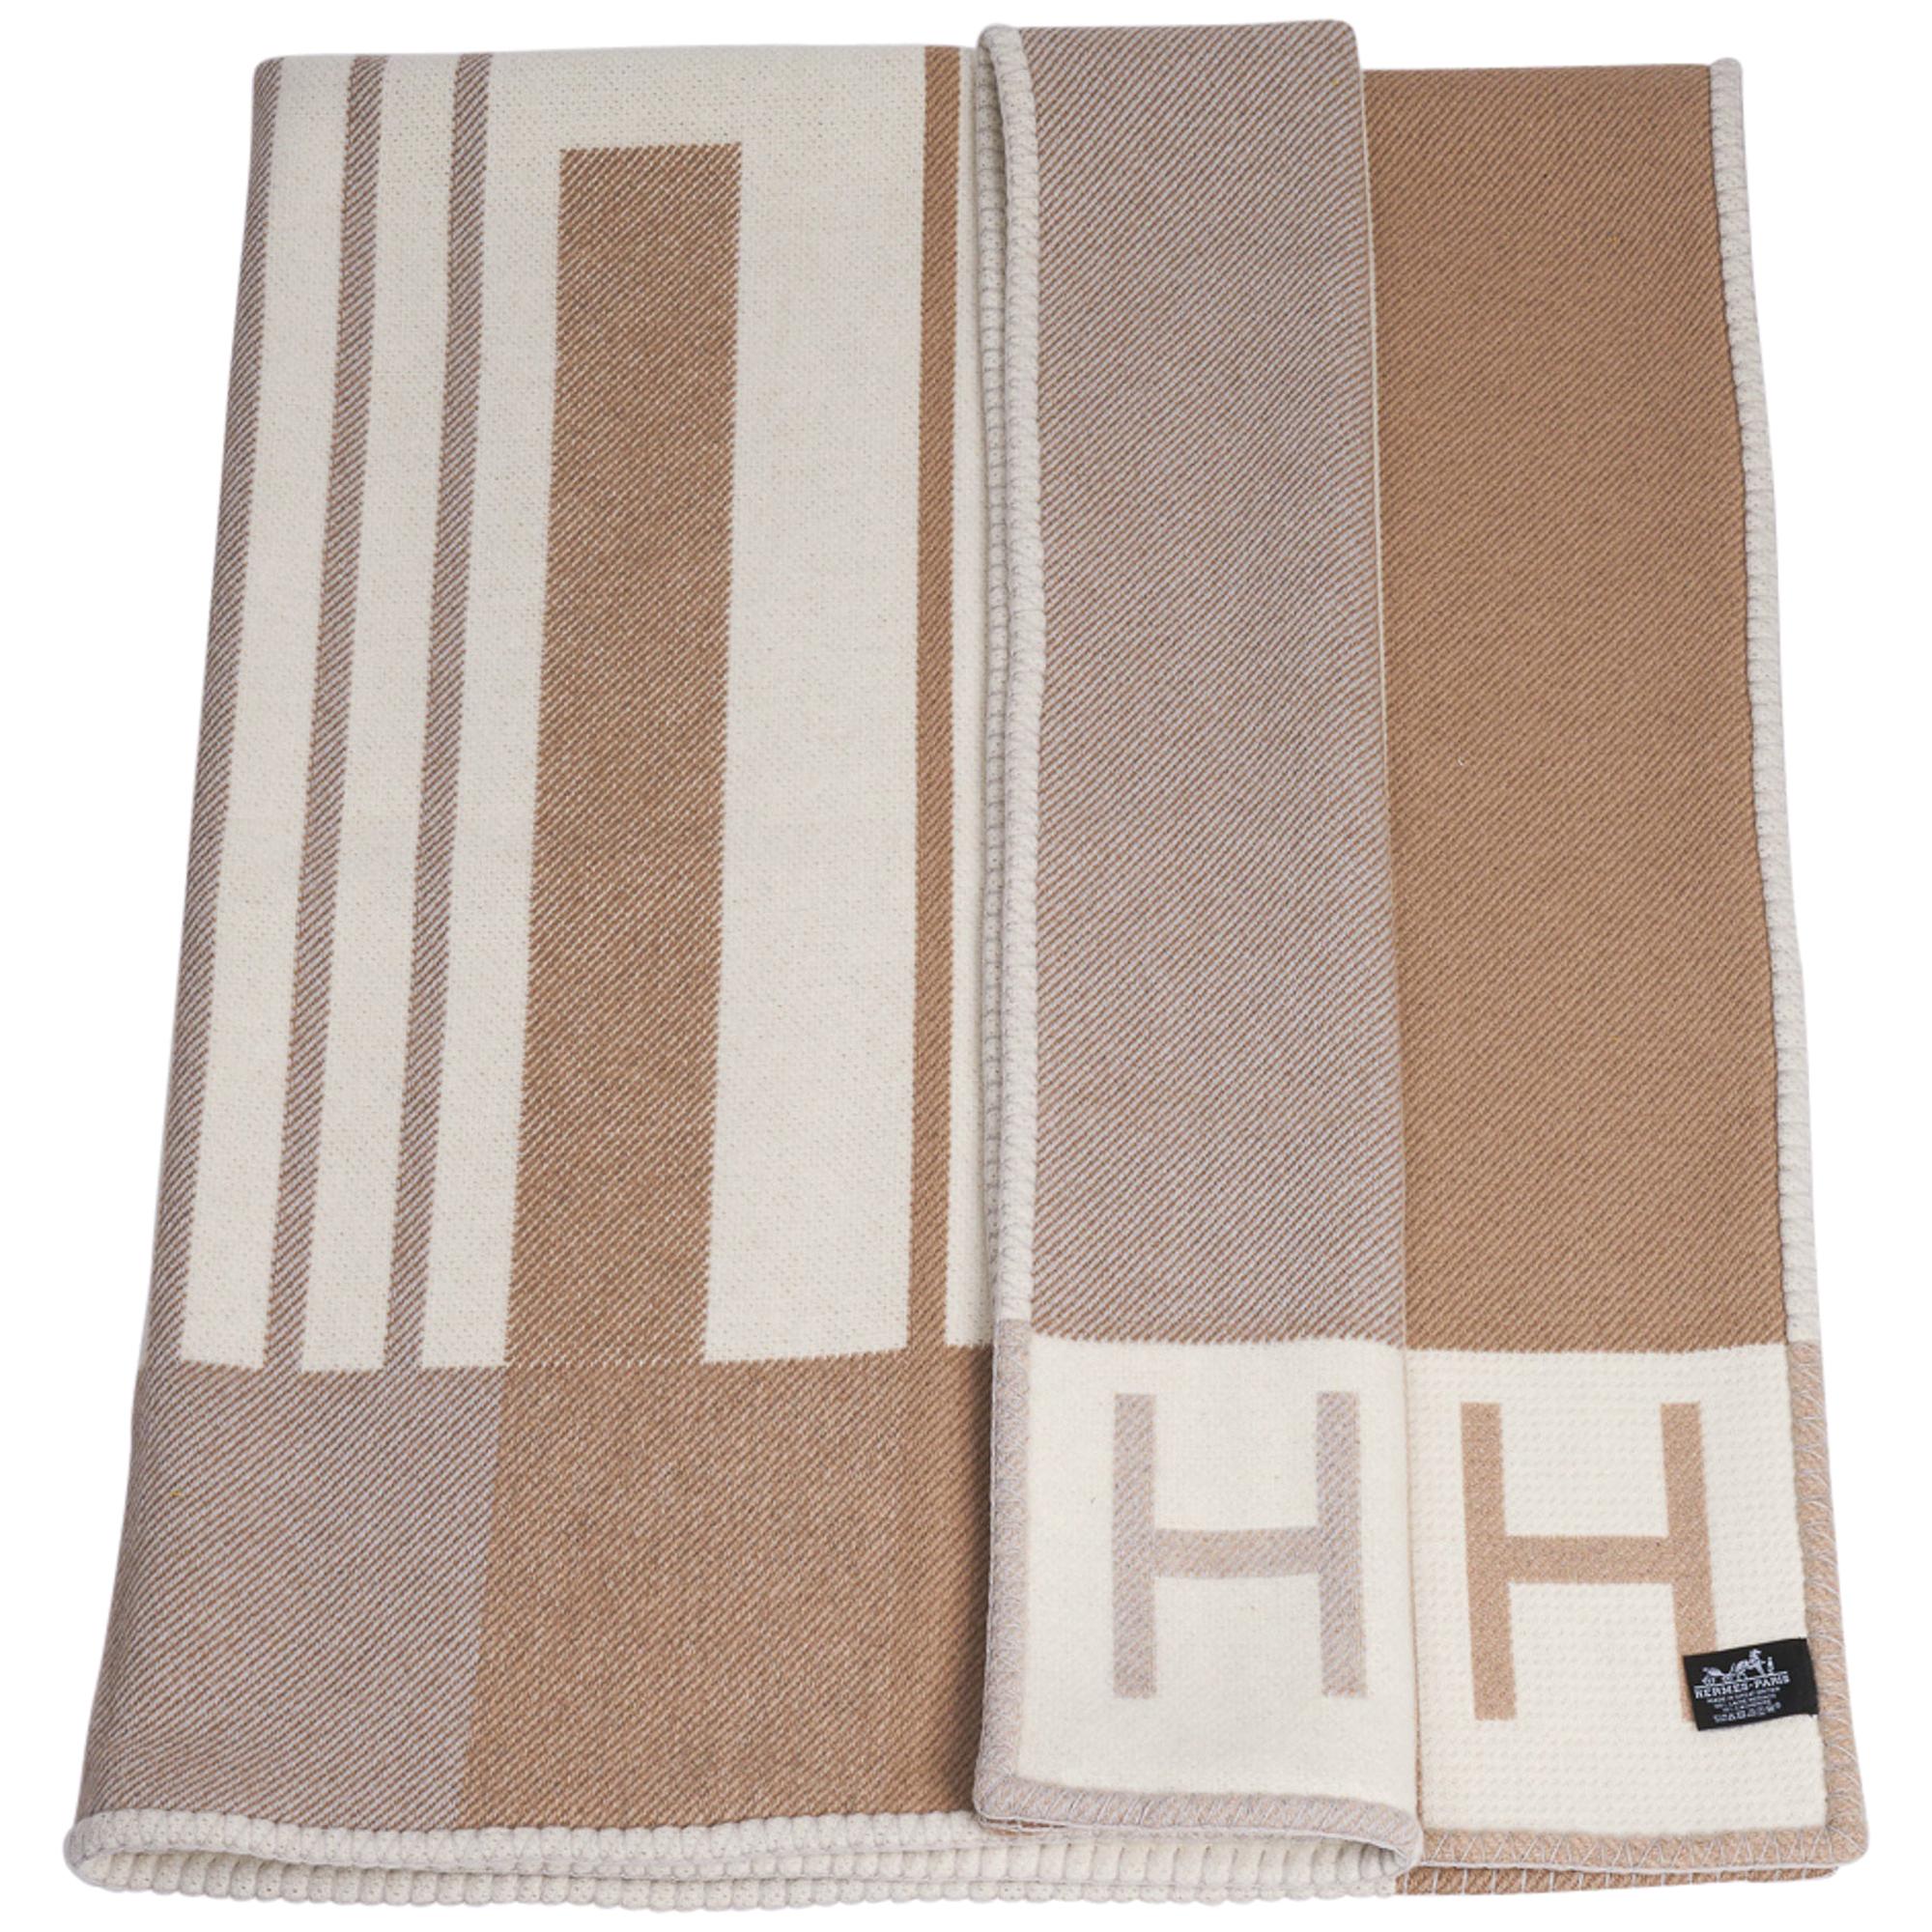 Hermes Avalon Vibration Throw Blanket Ecru Naturel Wool / Cashmere New